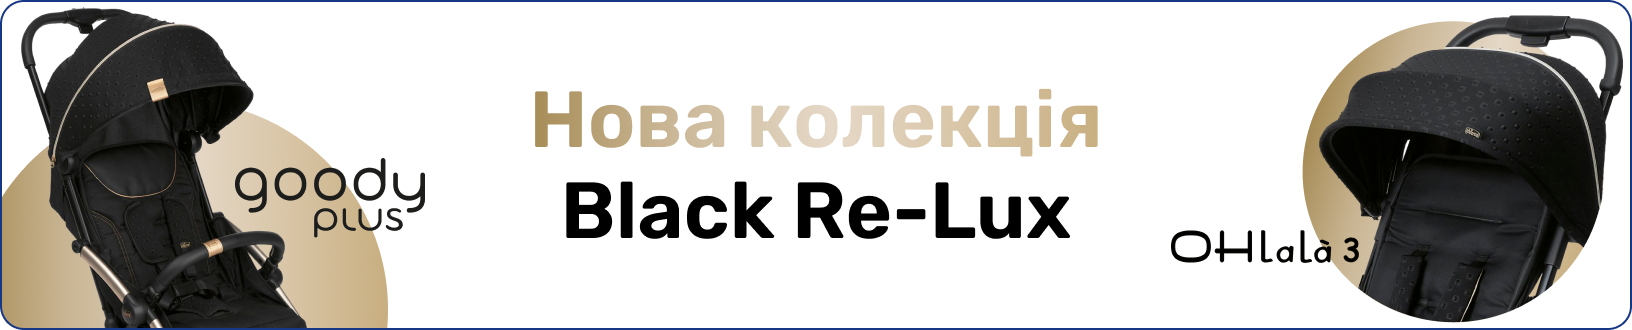 Black Re-Lux